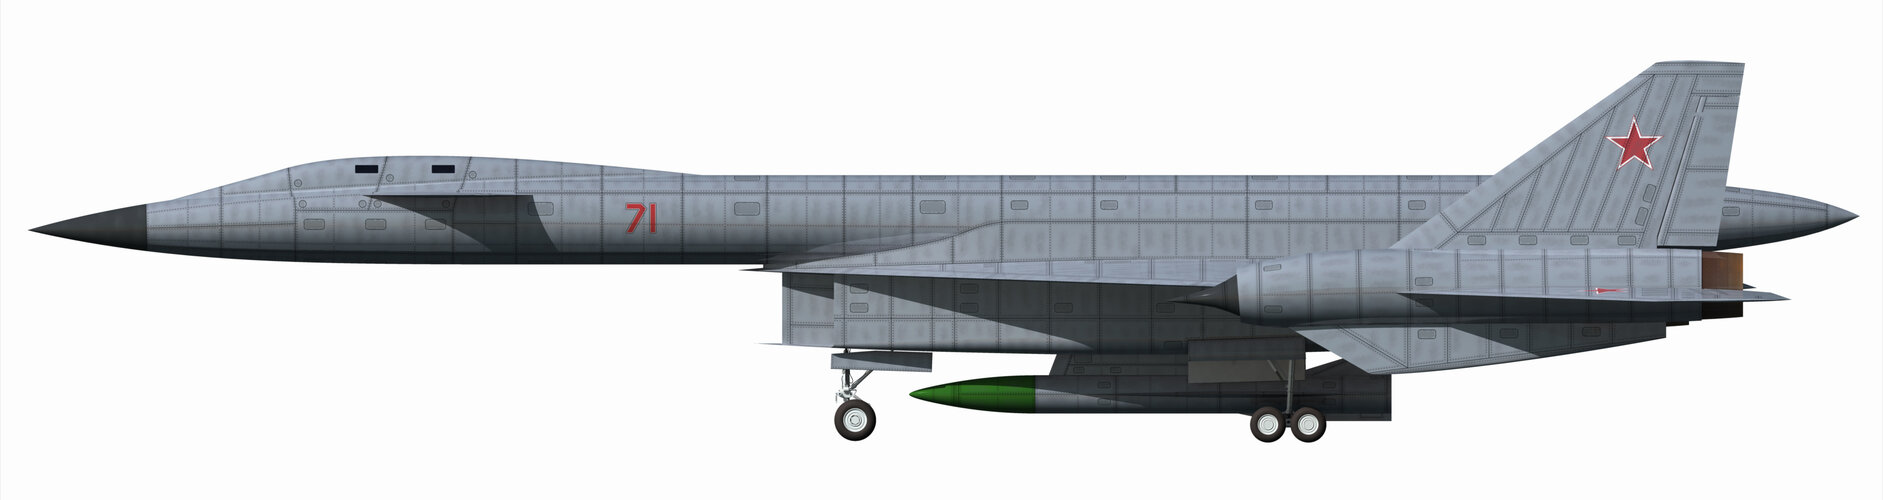 T-4 Blackbird side.jpg